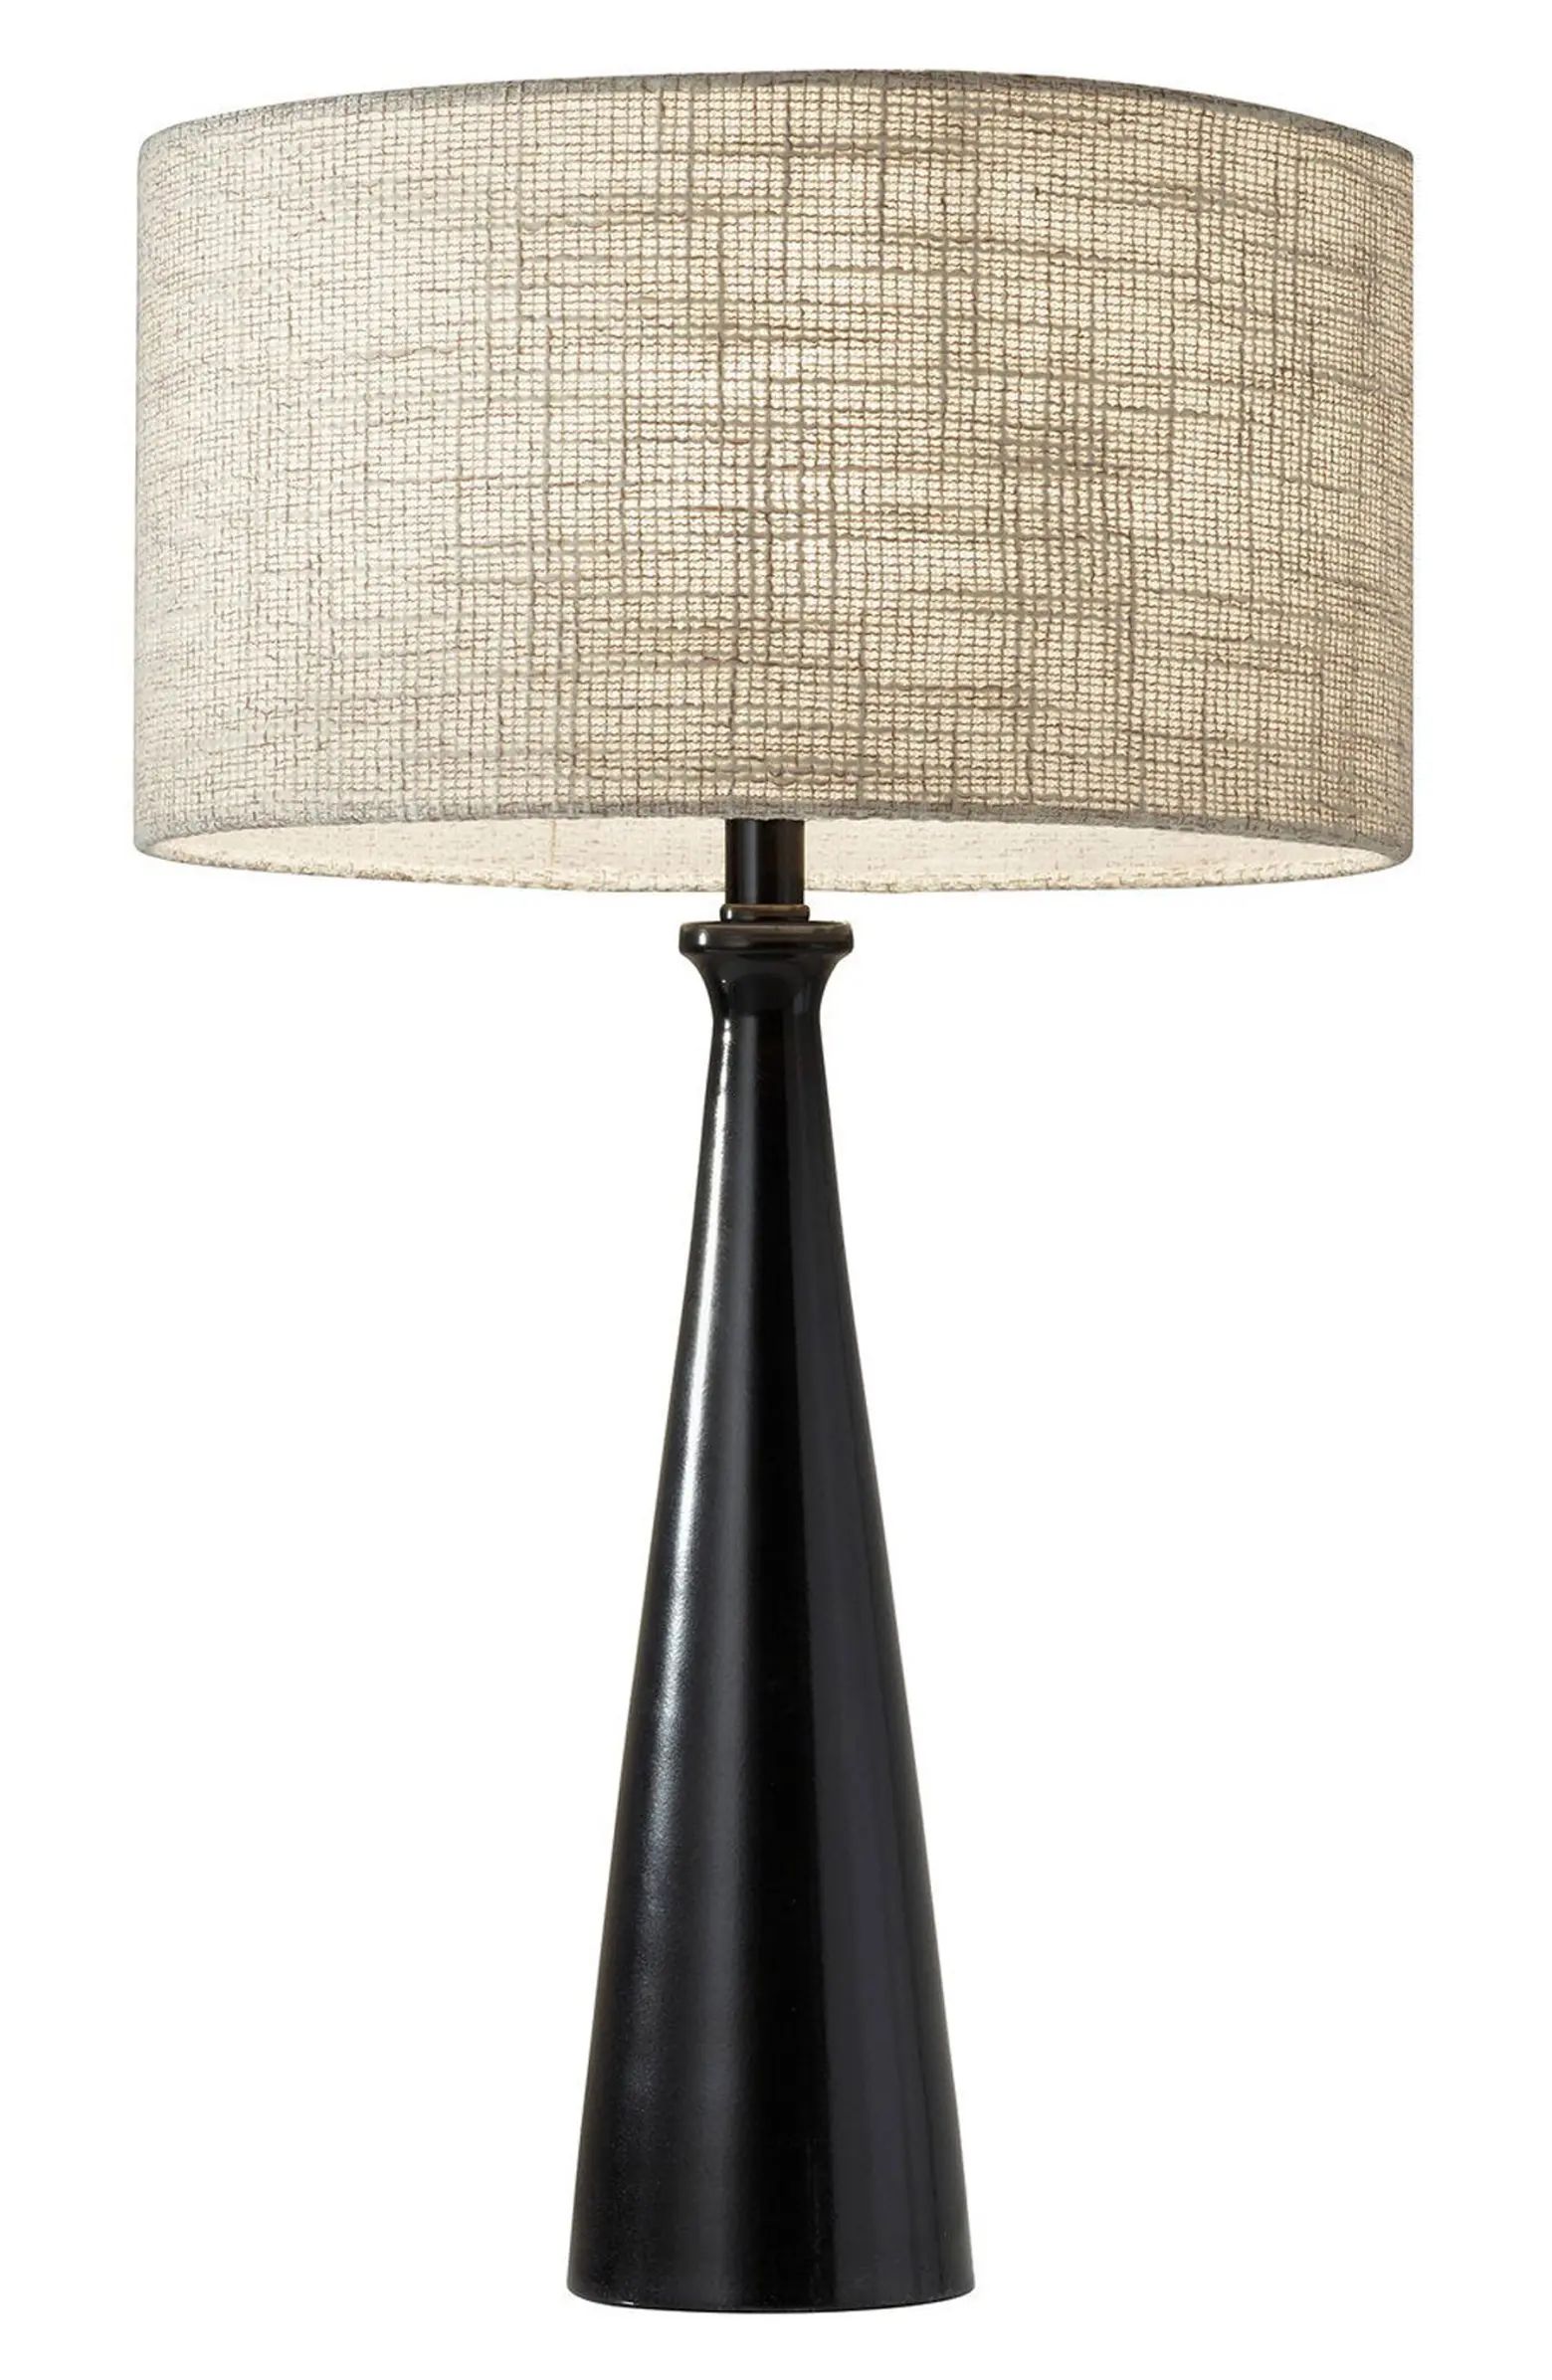 Linda Table Lamp | Nordstrom